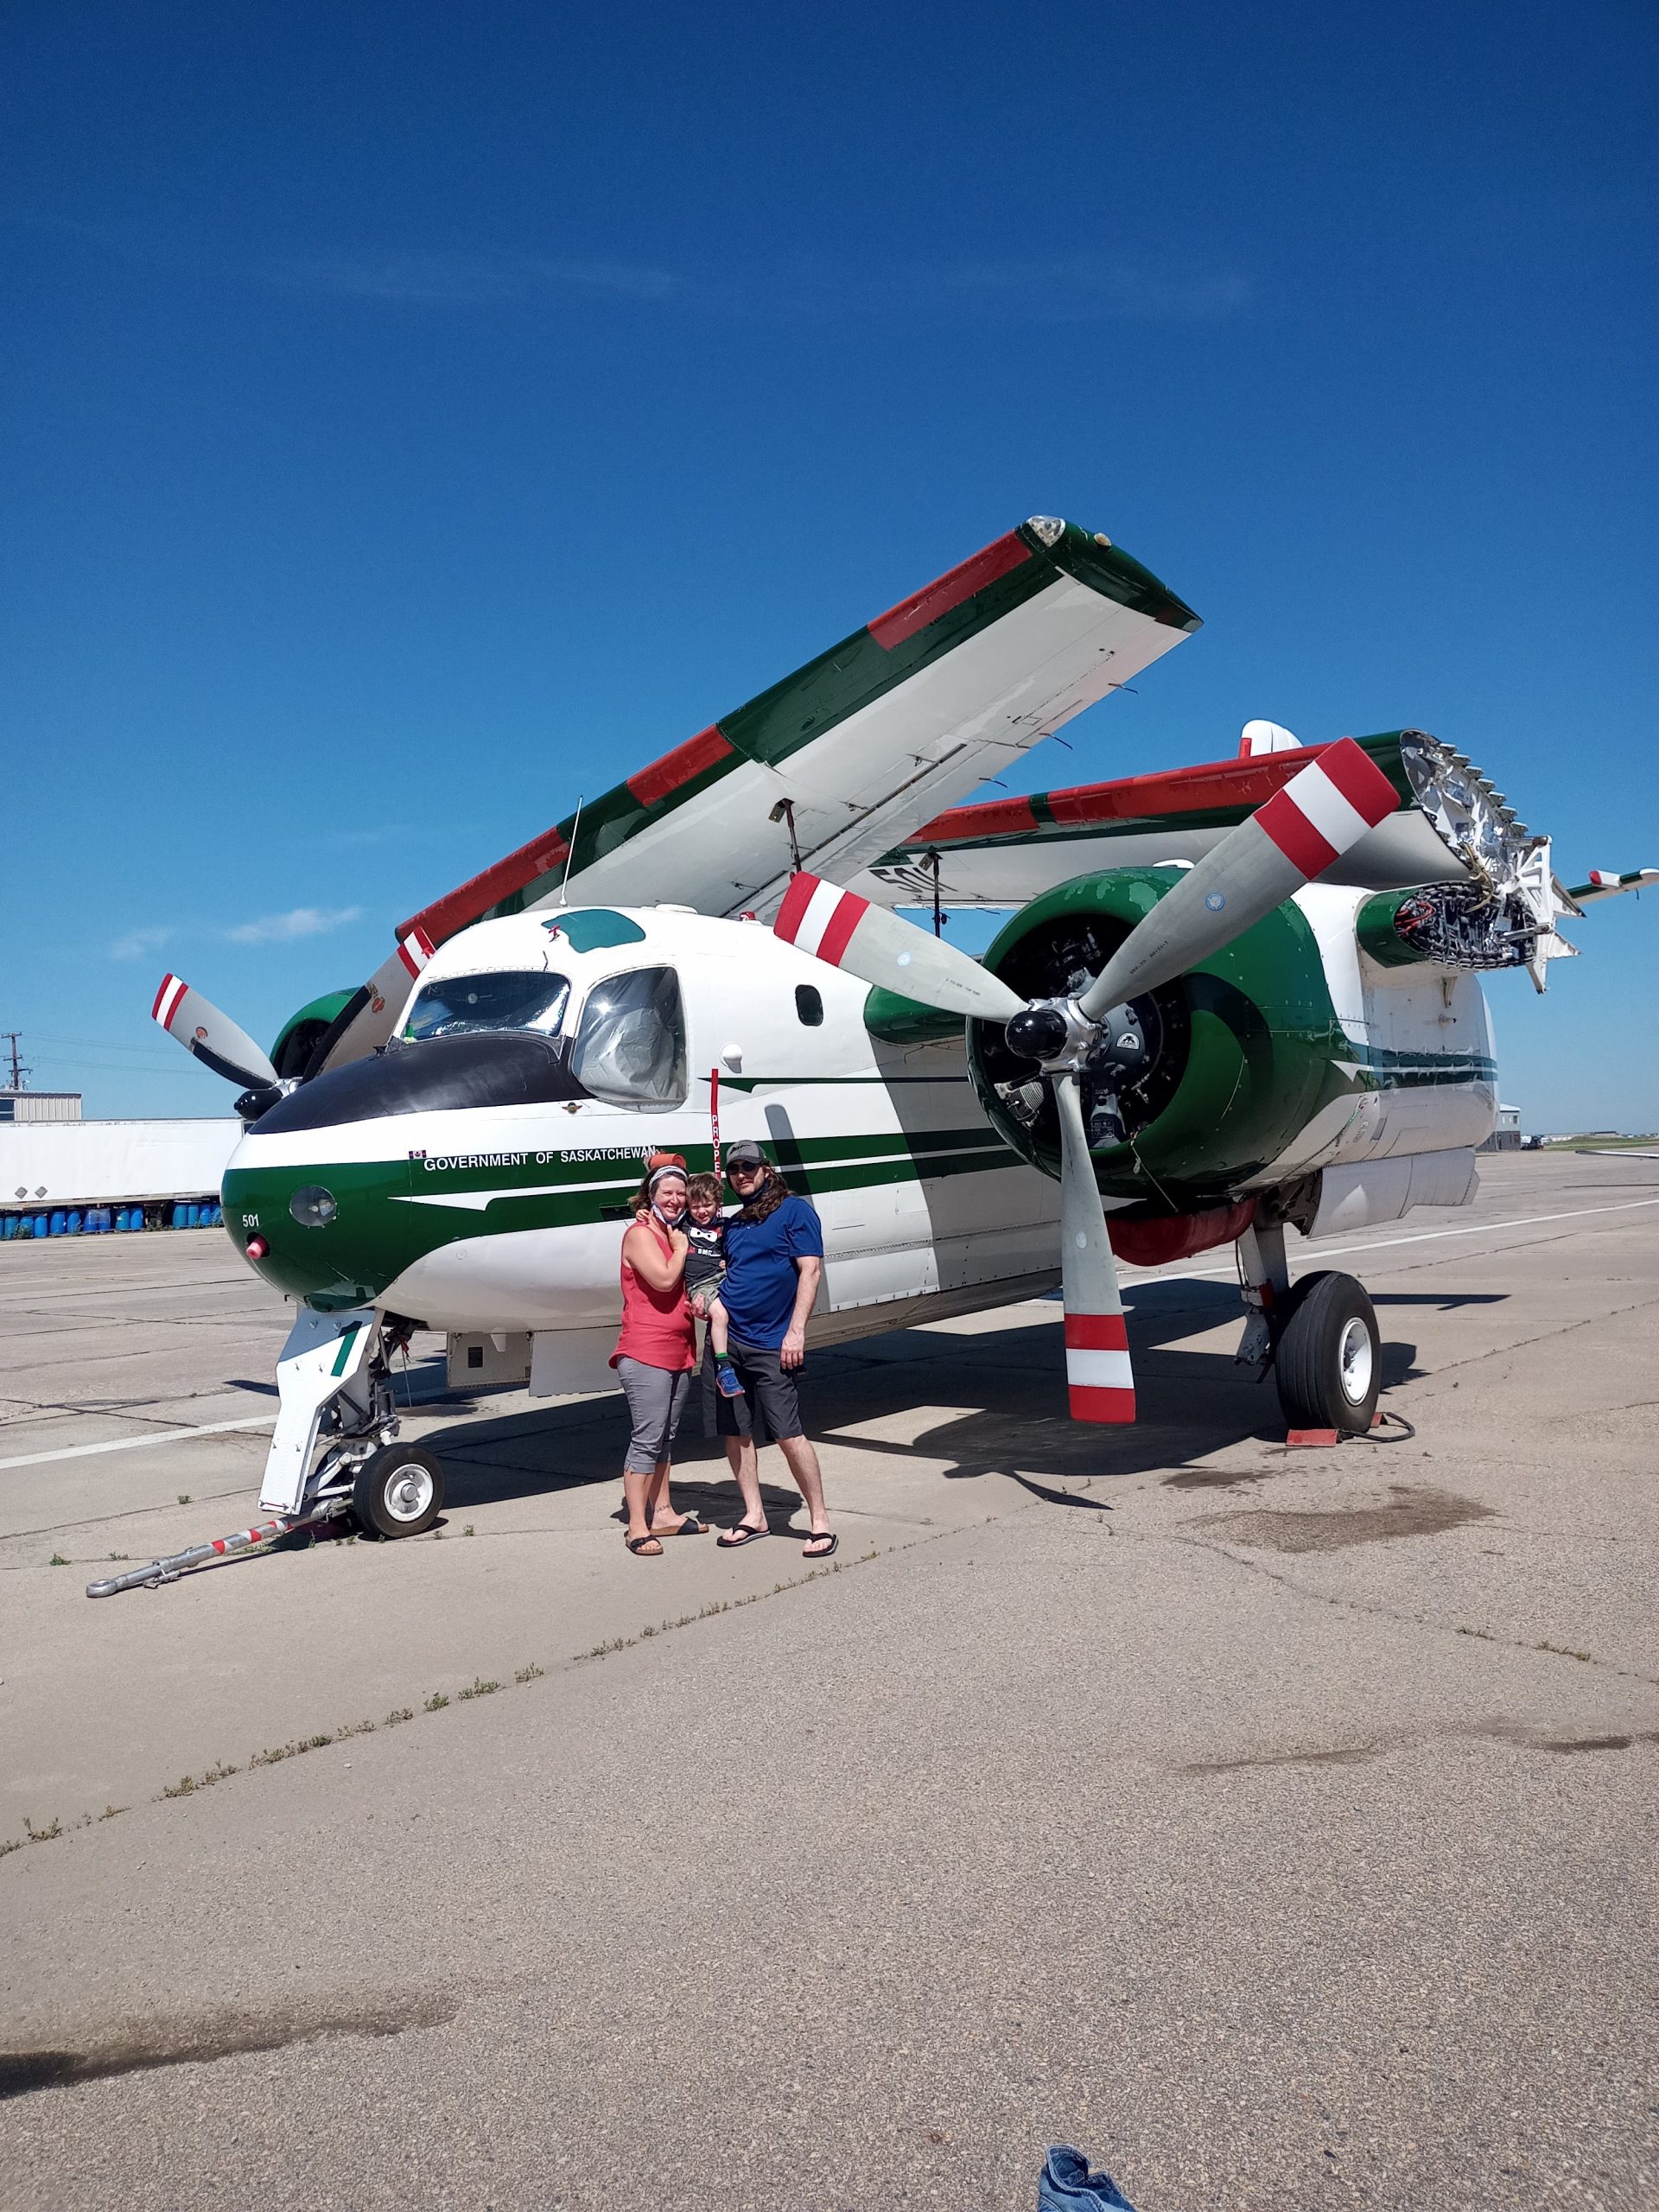 discovering saskatchewan aviation museum